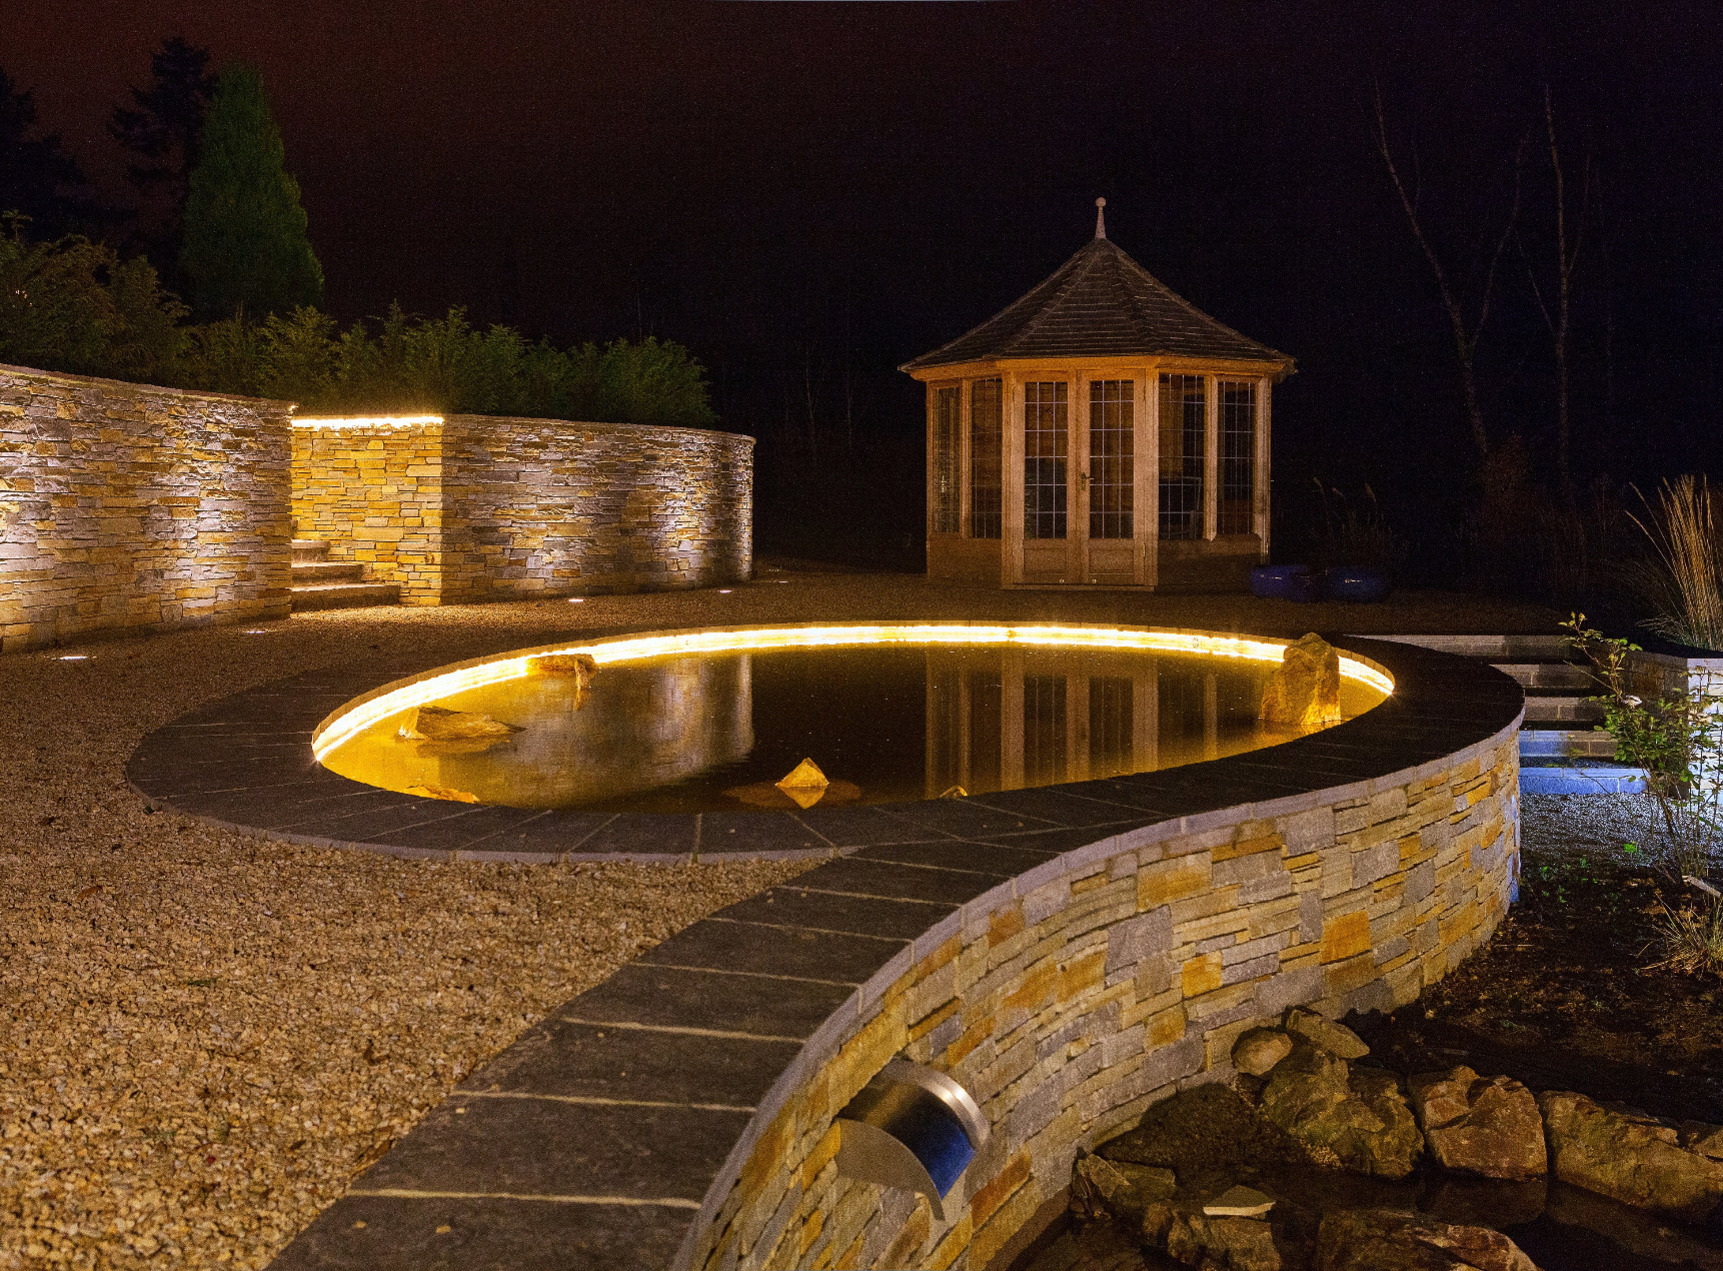 Professional LED Outdoor Garden Lighting in Wicklow | Design & Installation by Owen Chubb, Tel 087-2306128